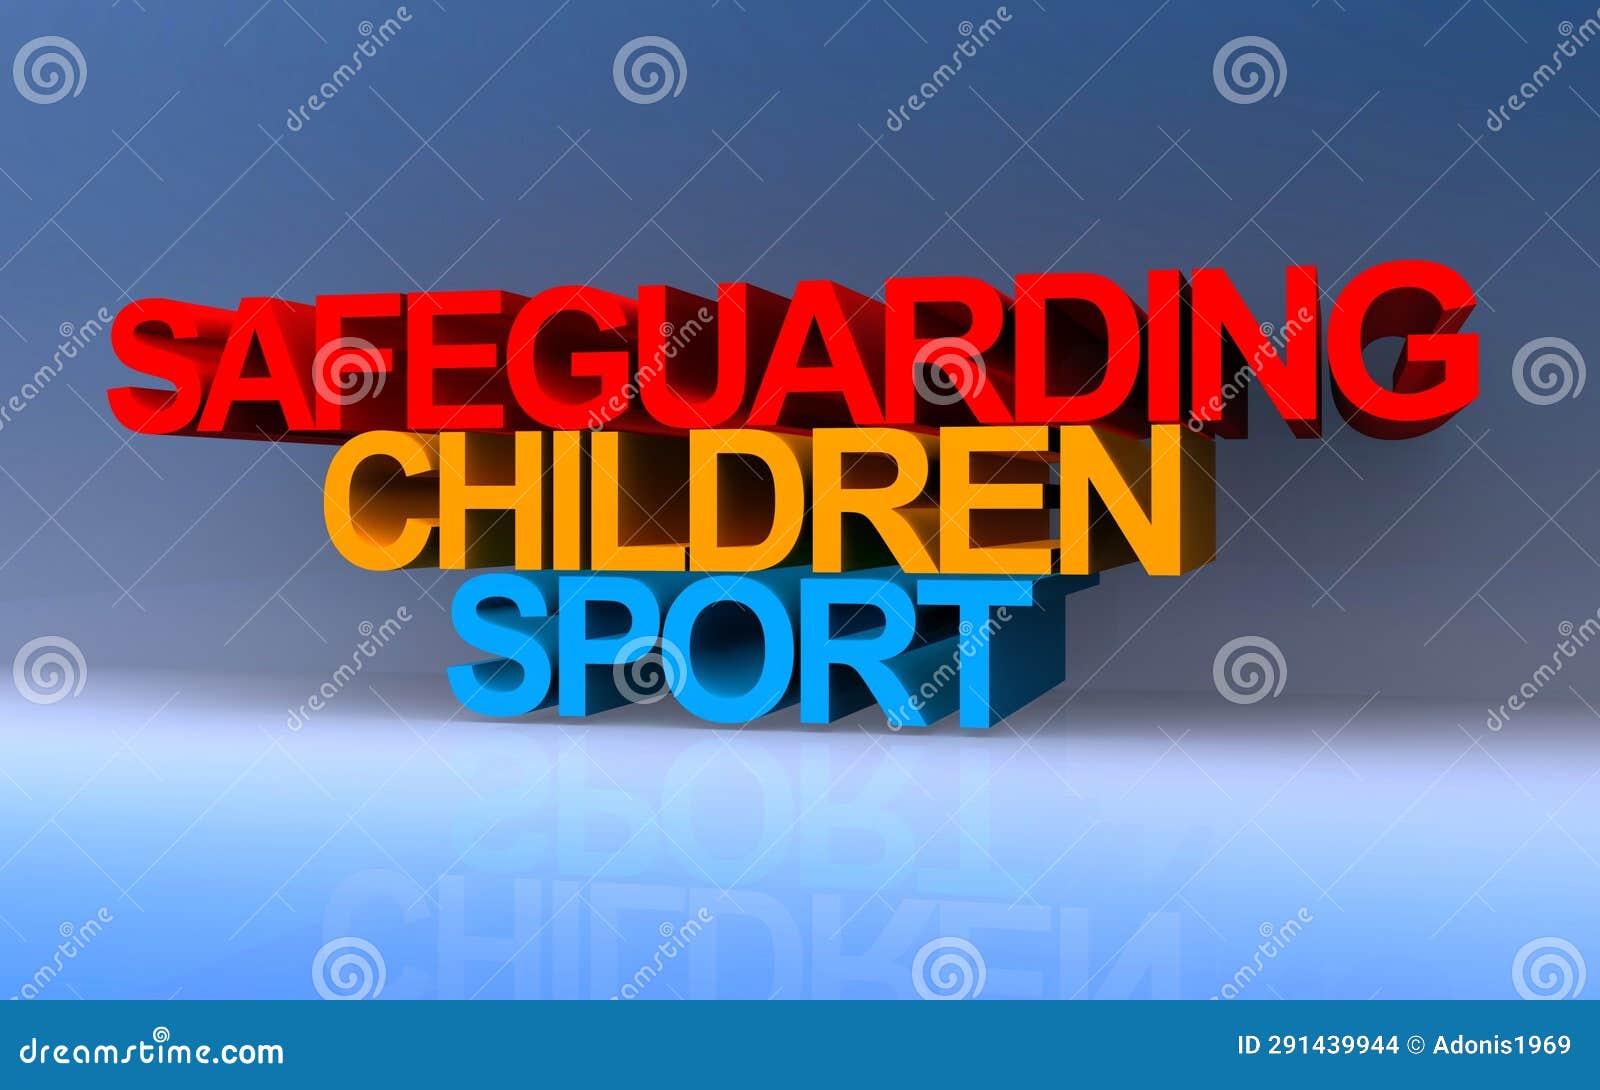 safeguarding children sport on blue